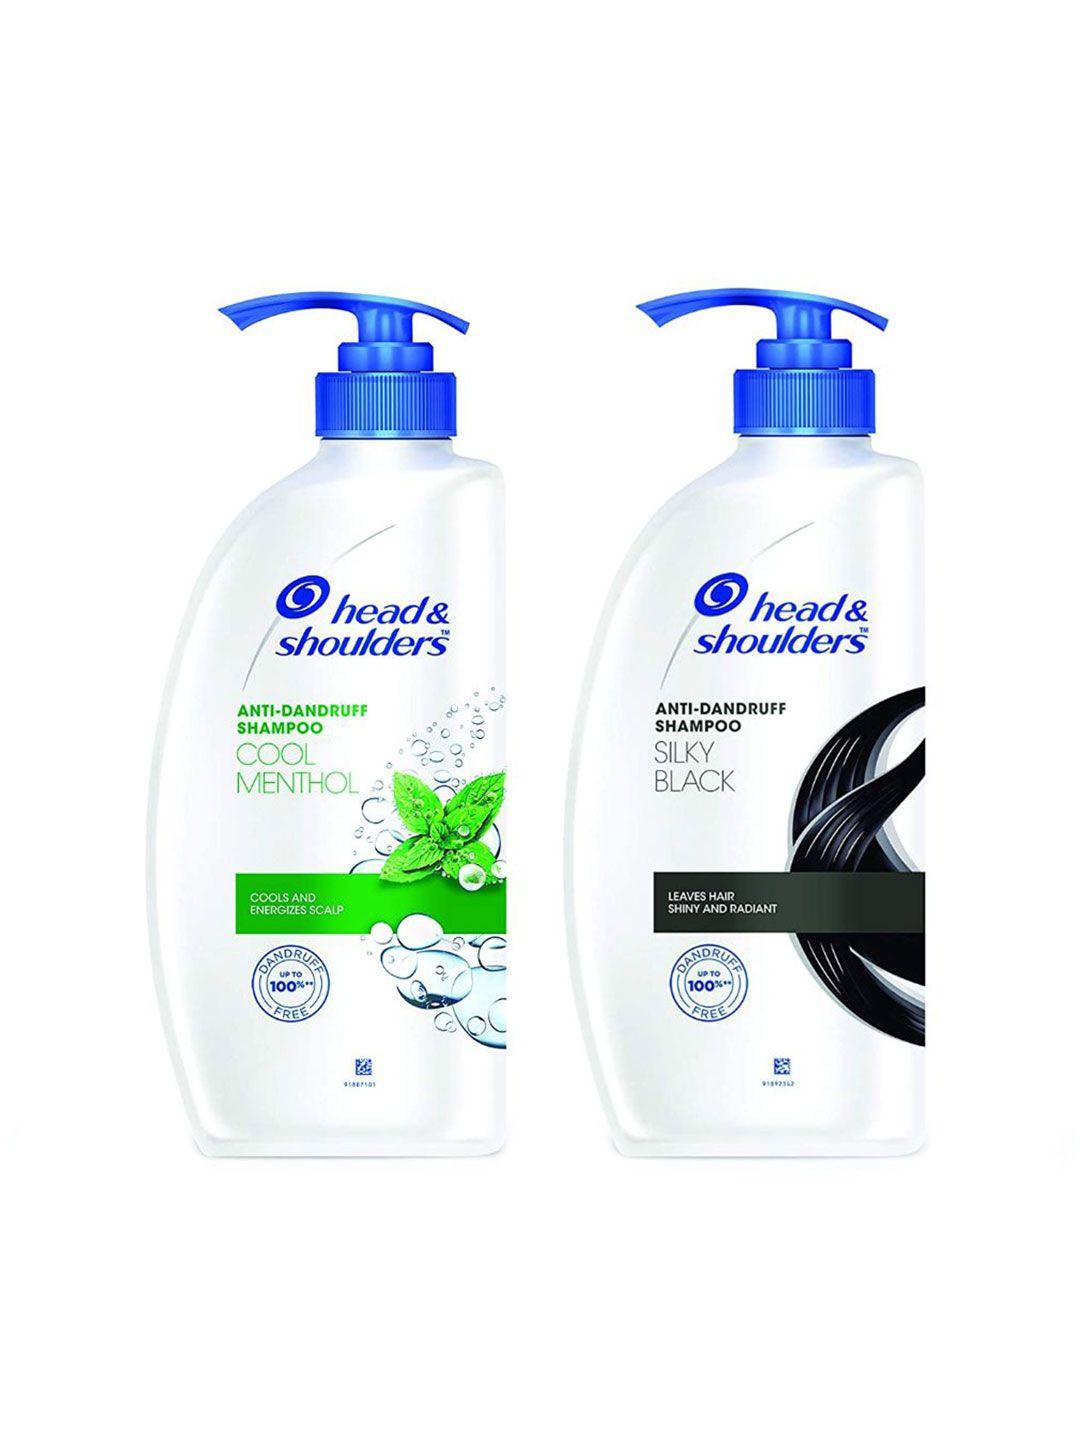 head & shoulders set of 2 anti-dandruff shampoo - cool menthol & silky black - 650 ml each